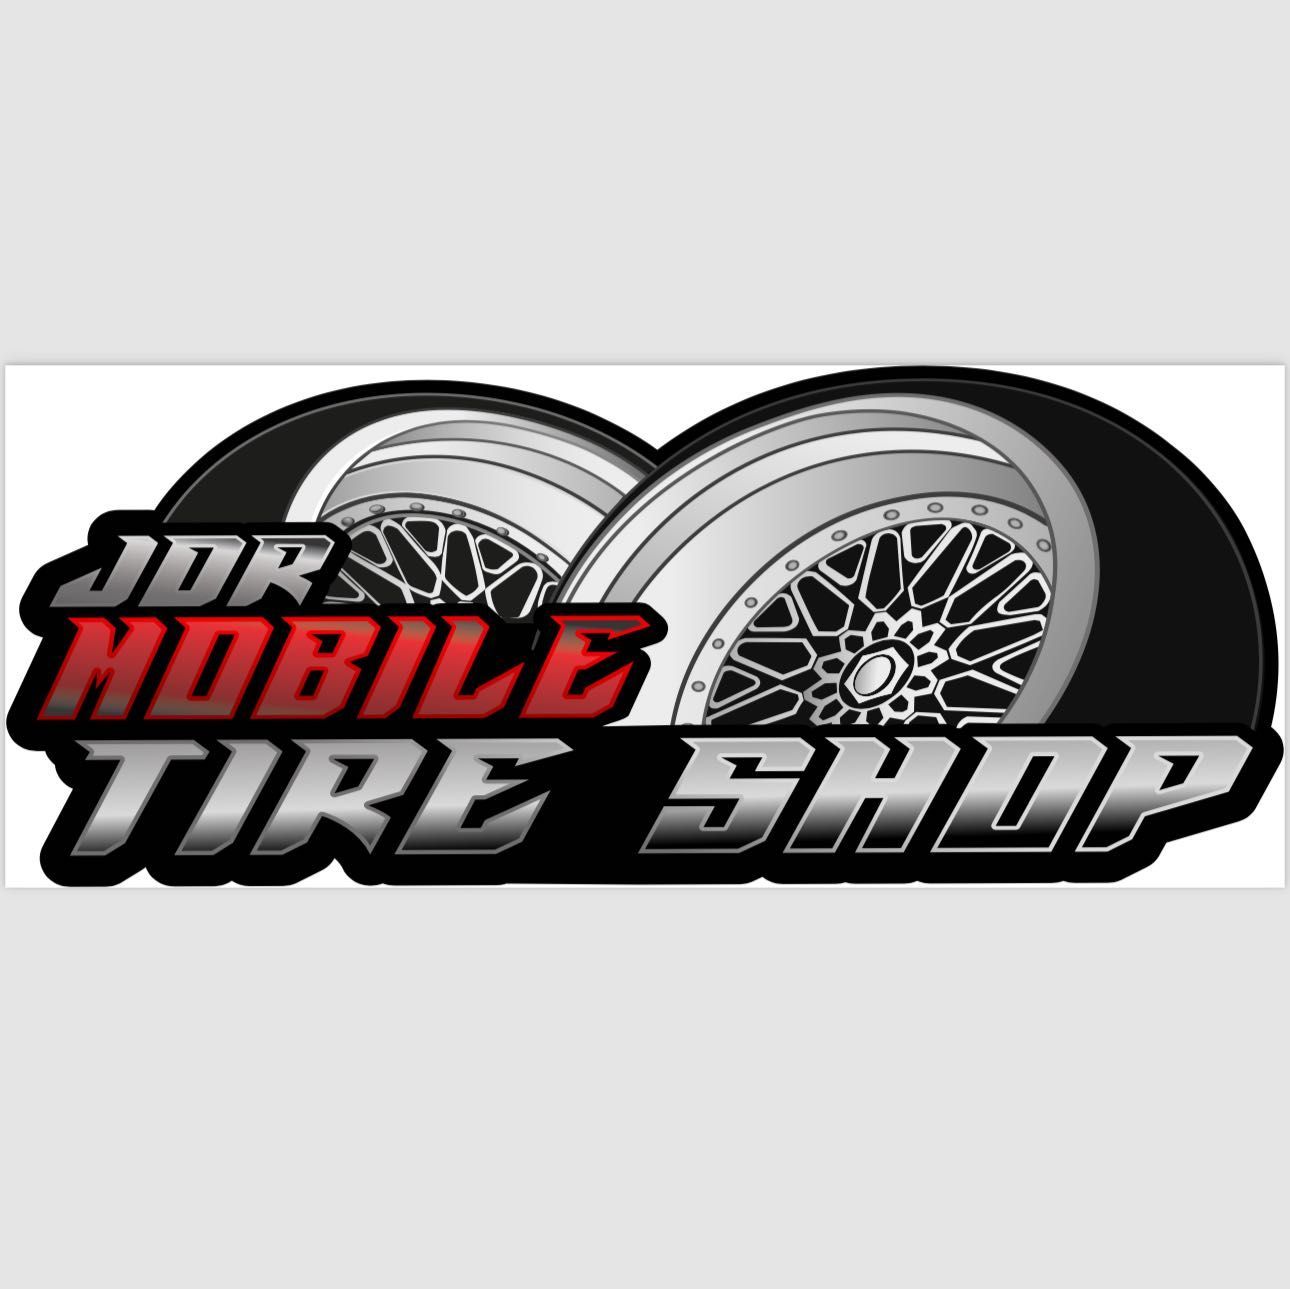 JDR Mobile Tires Shop, 23 Saxonia Ave, Lawrence, 01841